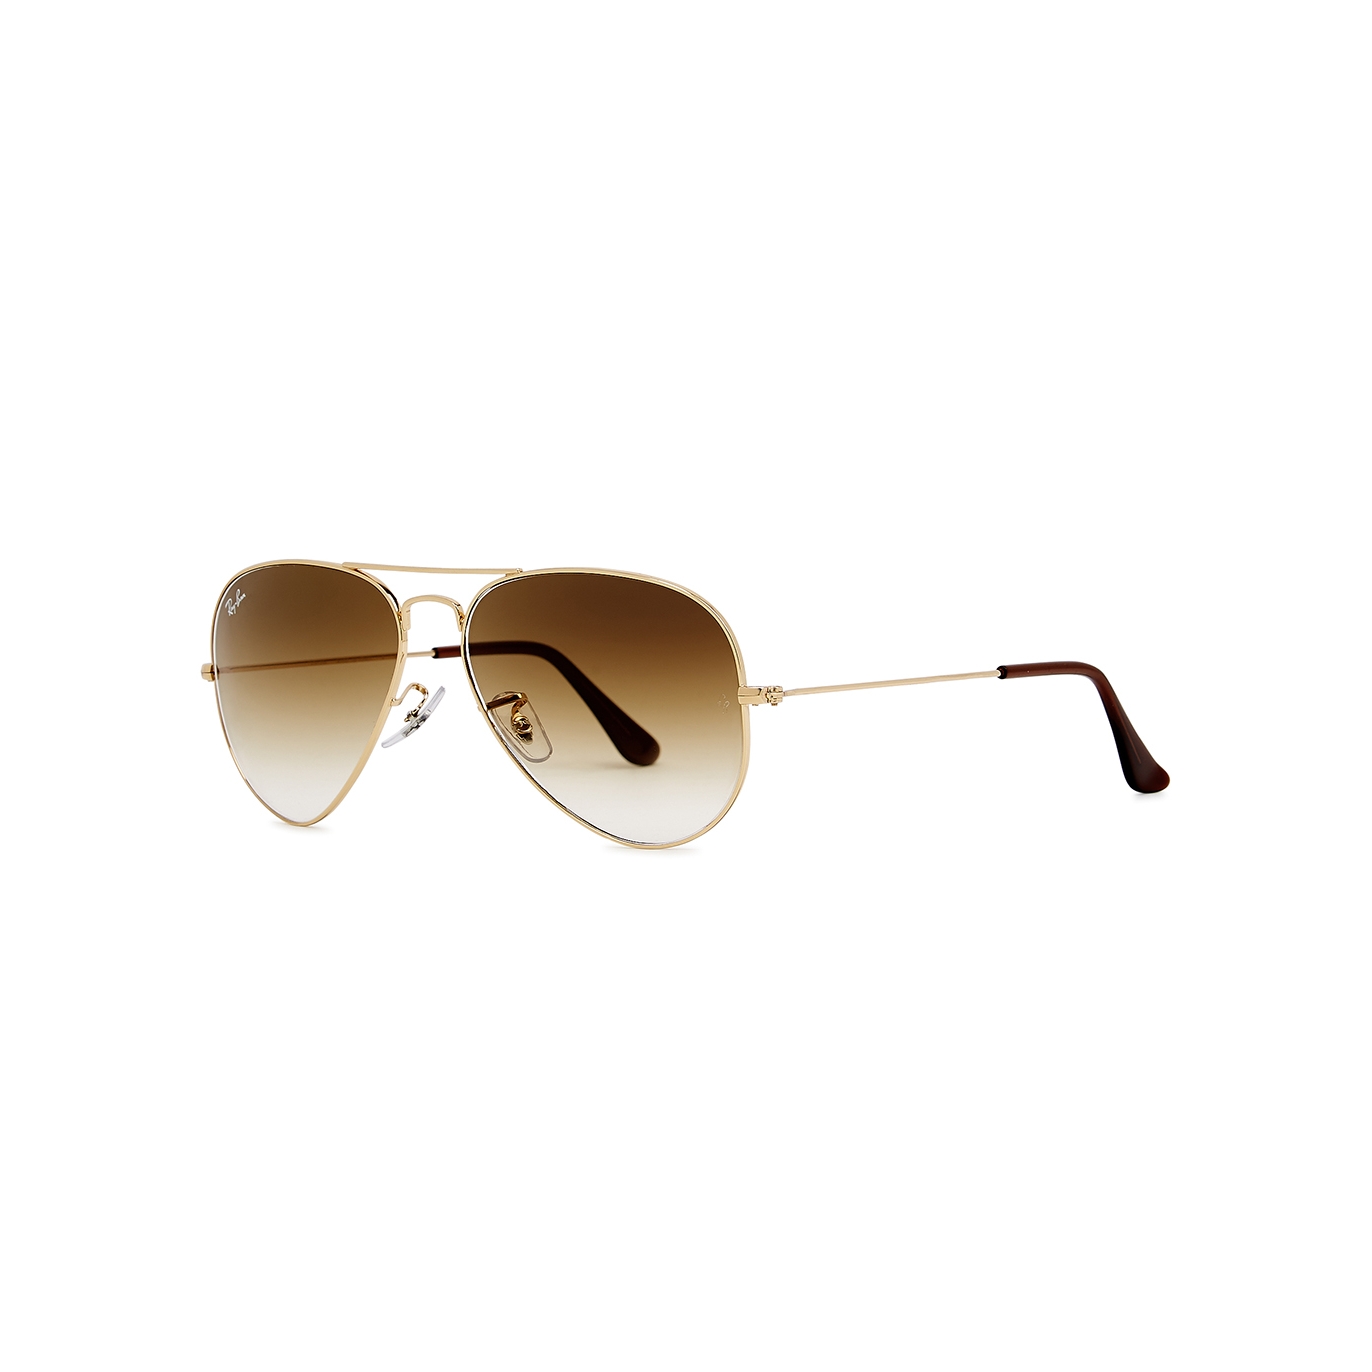 Ray-Ban 55 Gold-tone Aviator-style Sunglasses, Sunglasses, Brown Lense